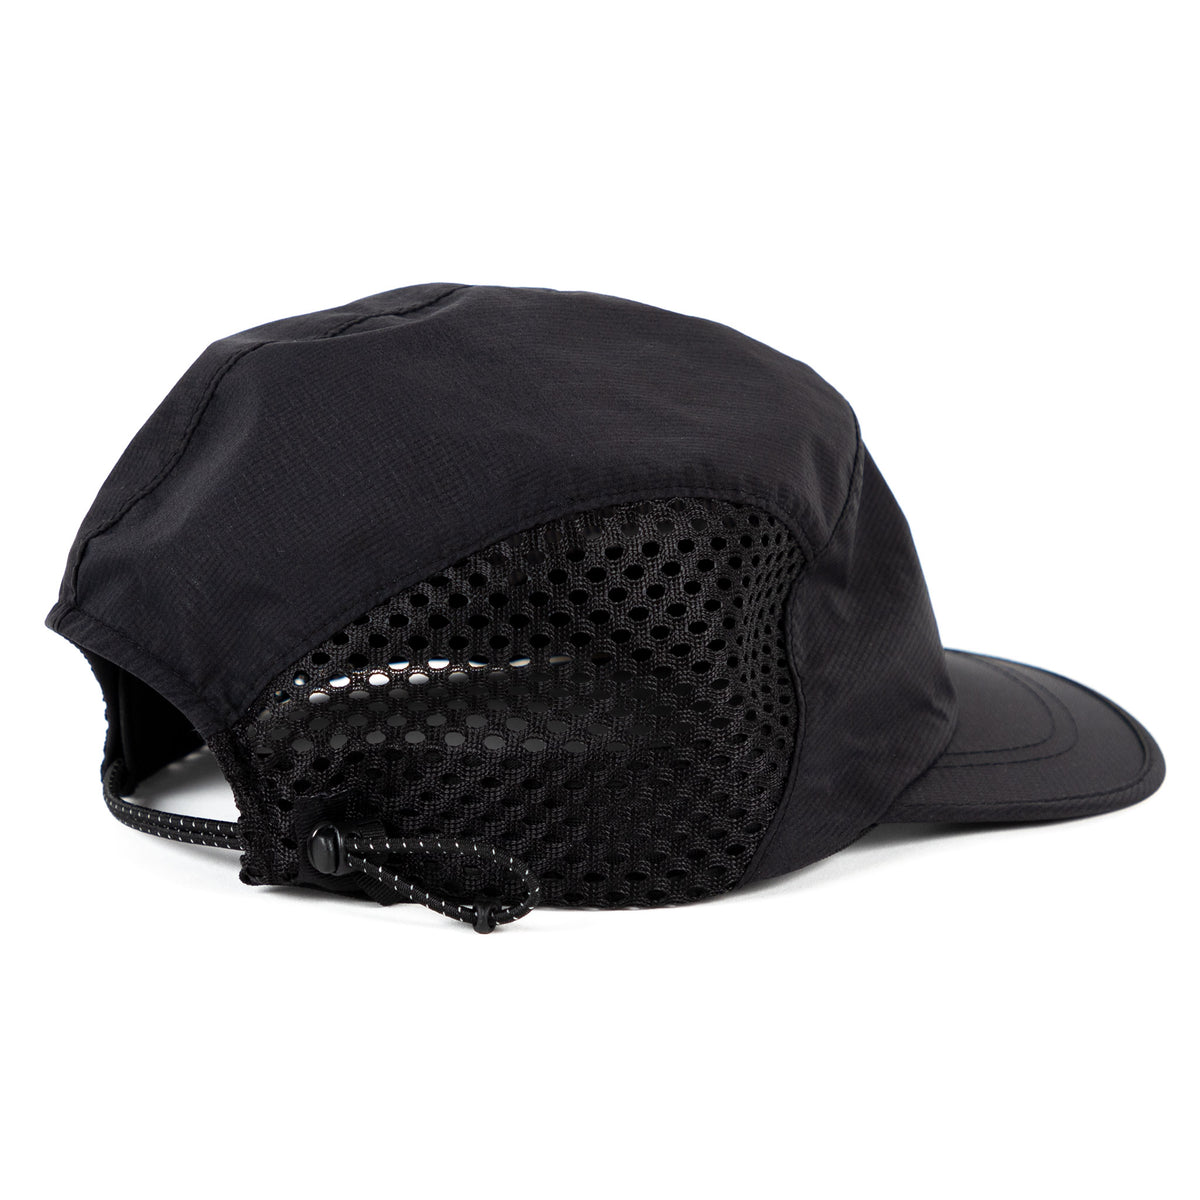 Goldwin short brim mesh cap black